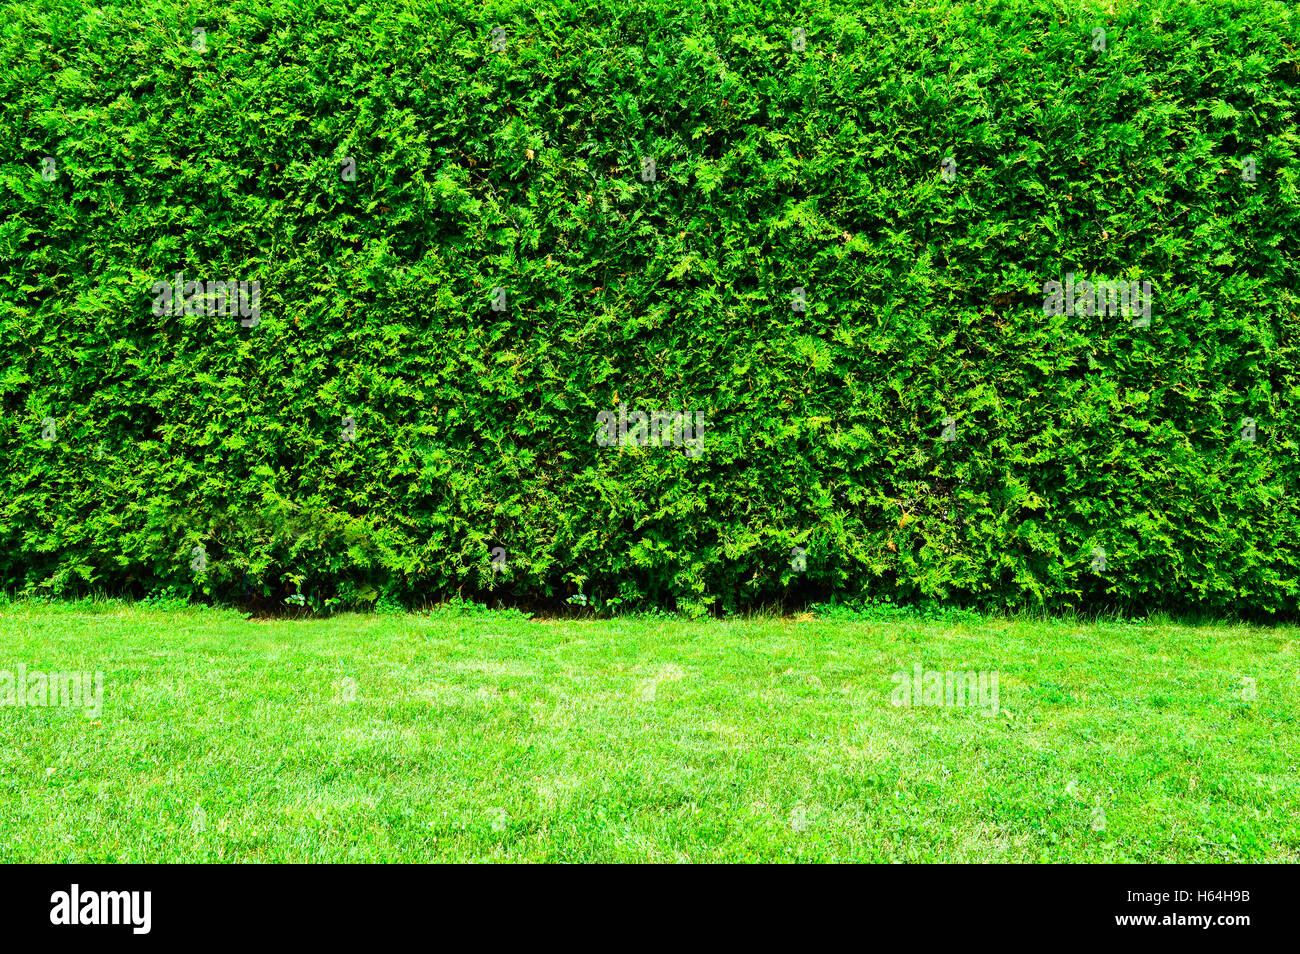 Green Hedge of Thuja Trees Stock Photo